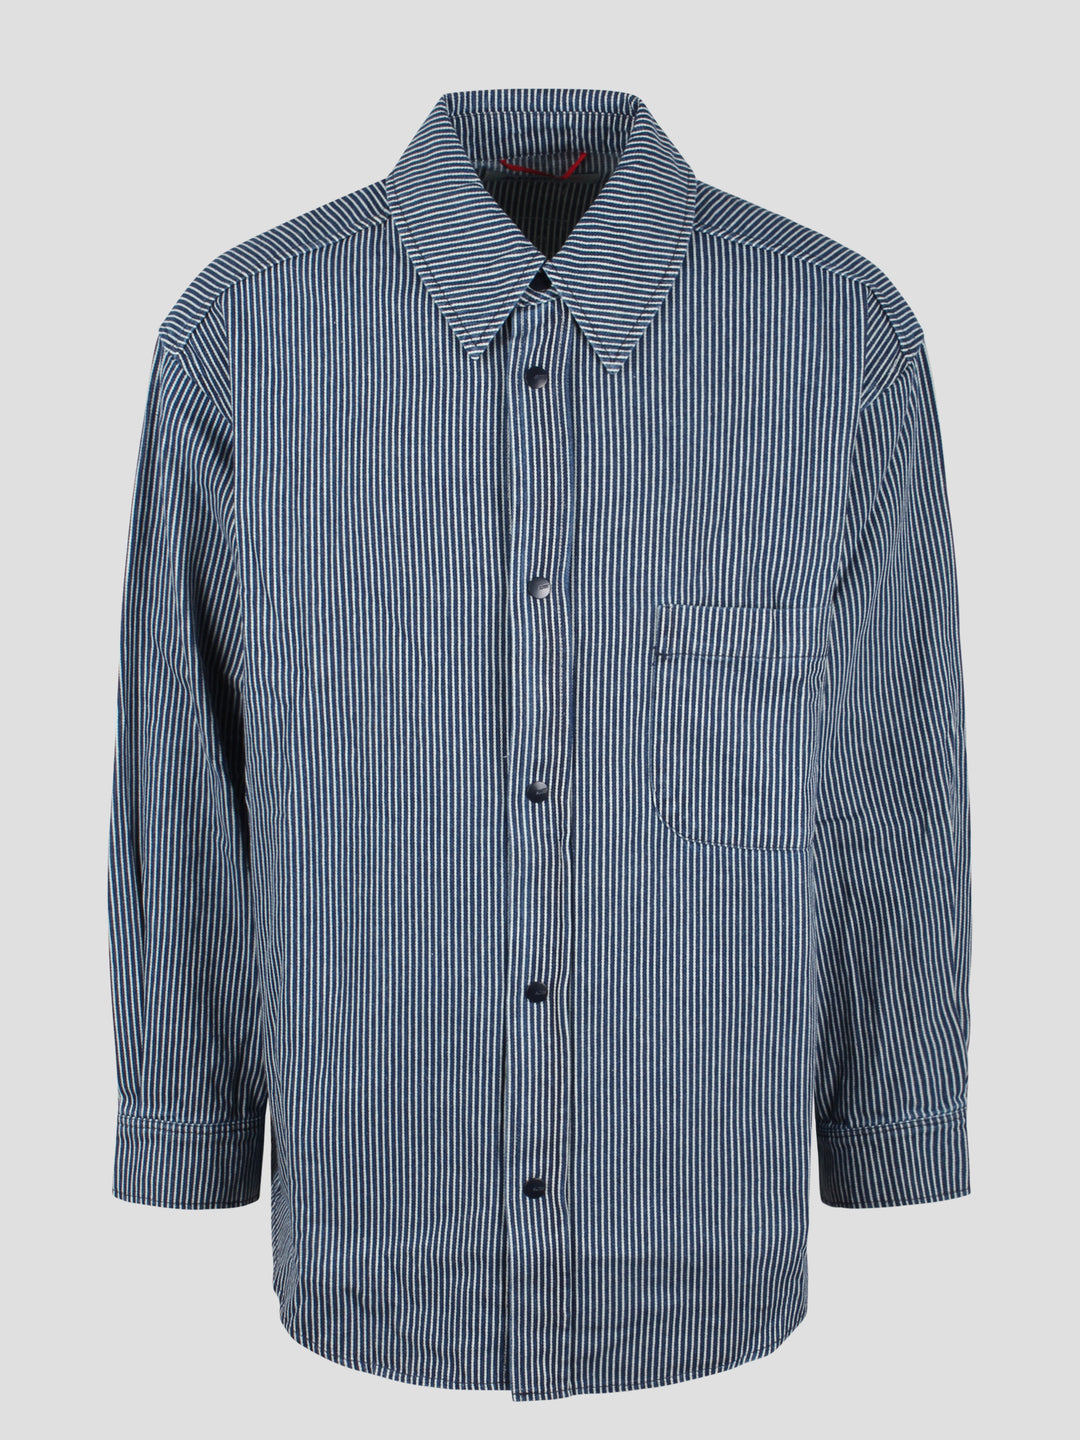 Oversize cotton denim striped shirt